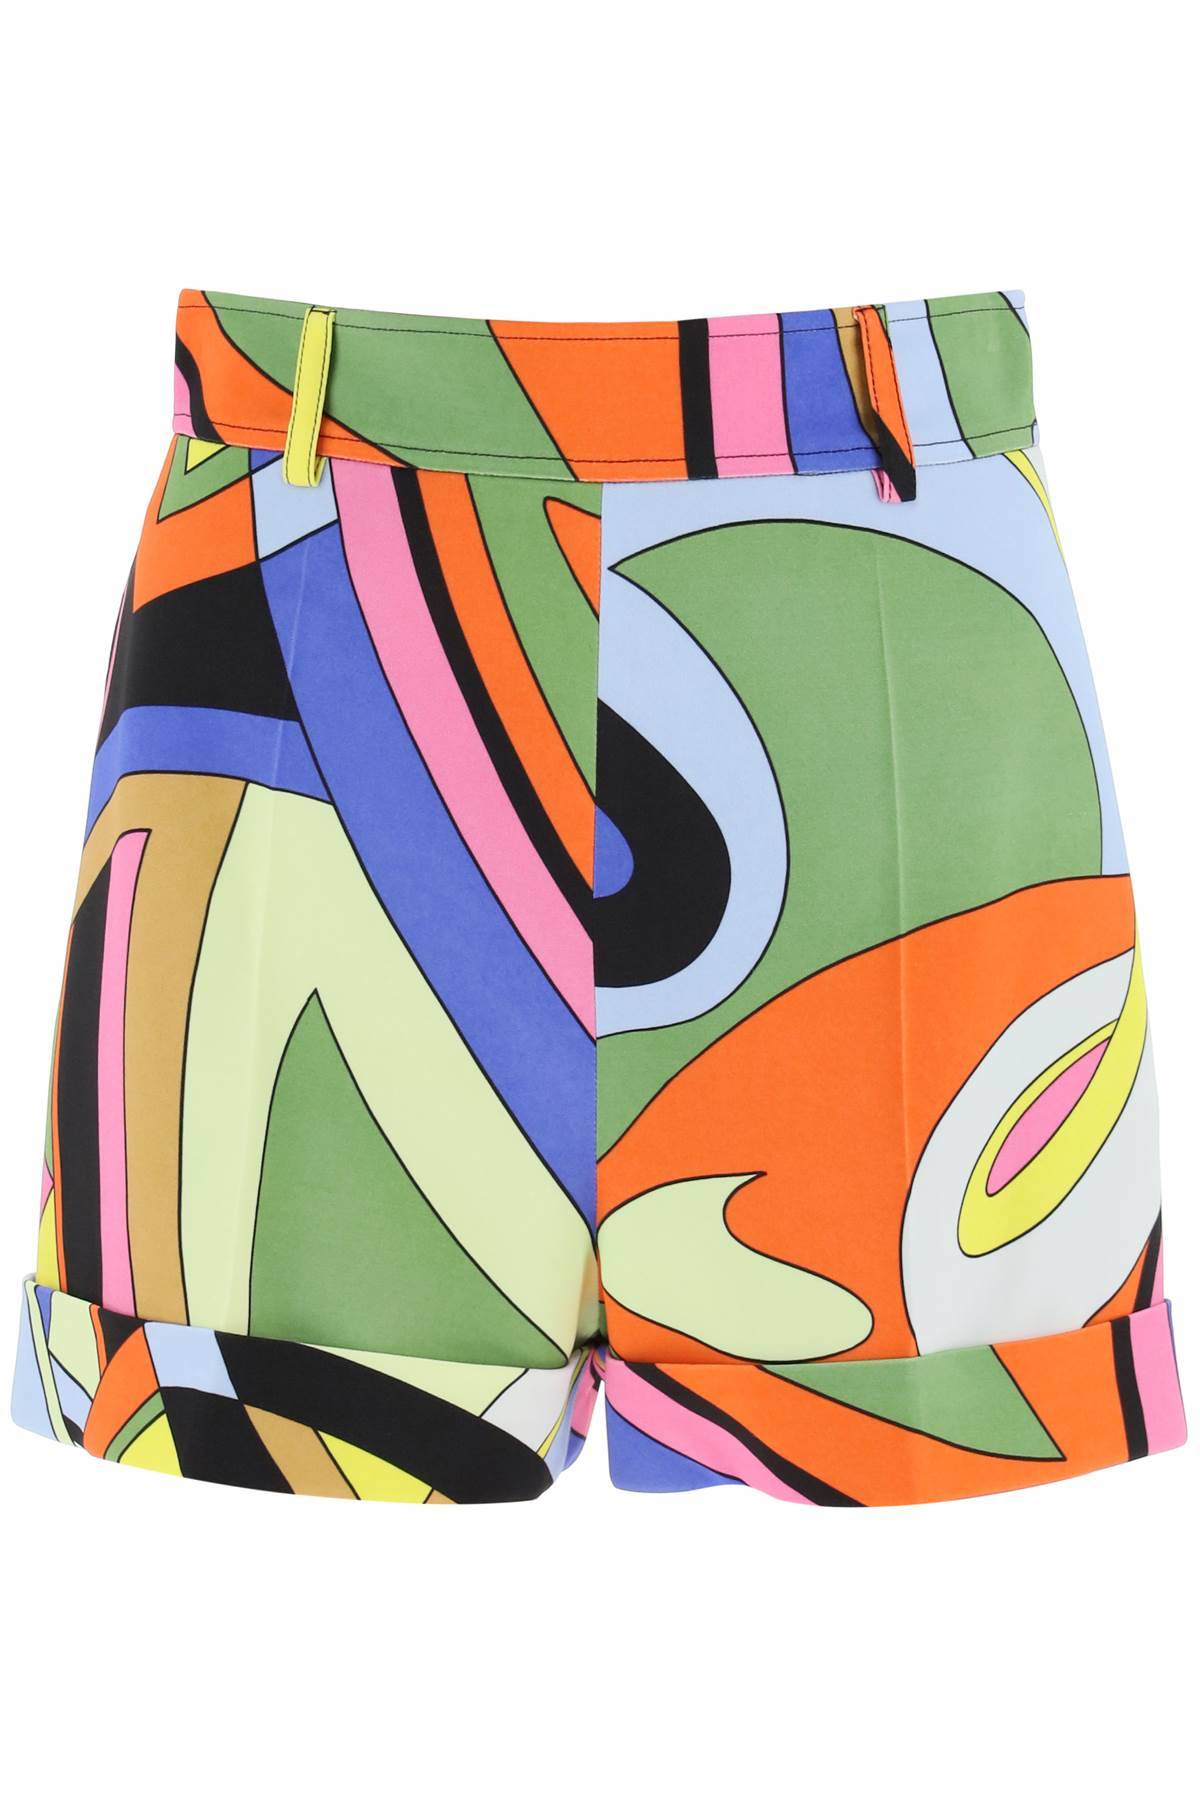 Moschino MOSCHINO multicolor printed shorts